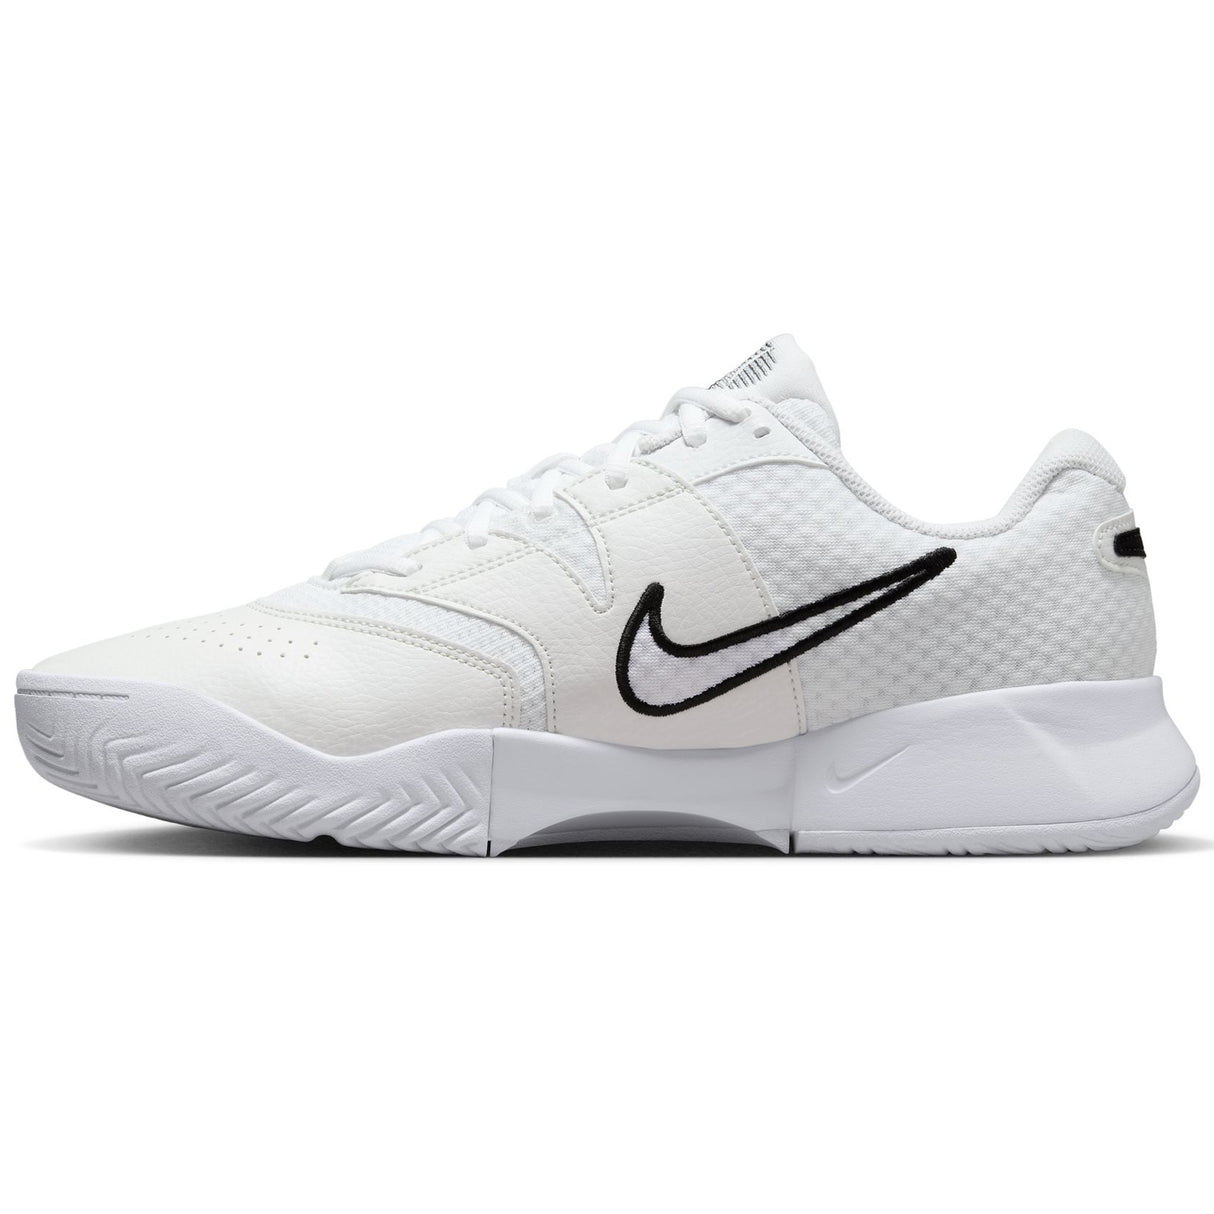 NikeCourt Lite 4 Mens Tennis Shoes